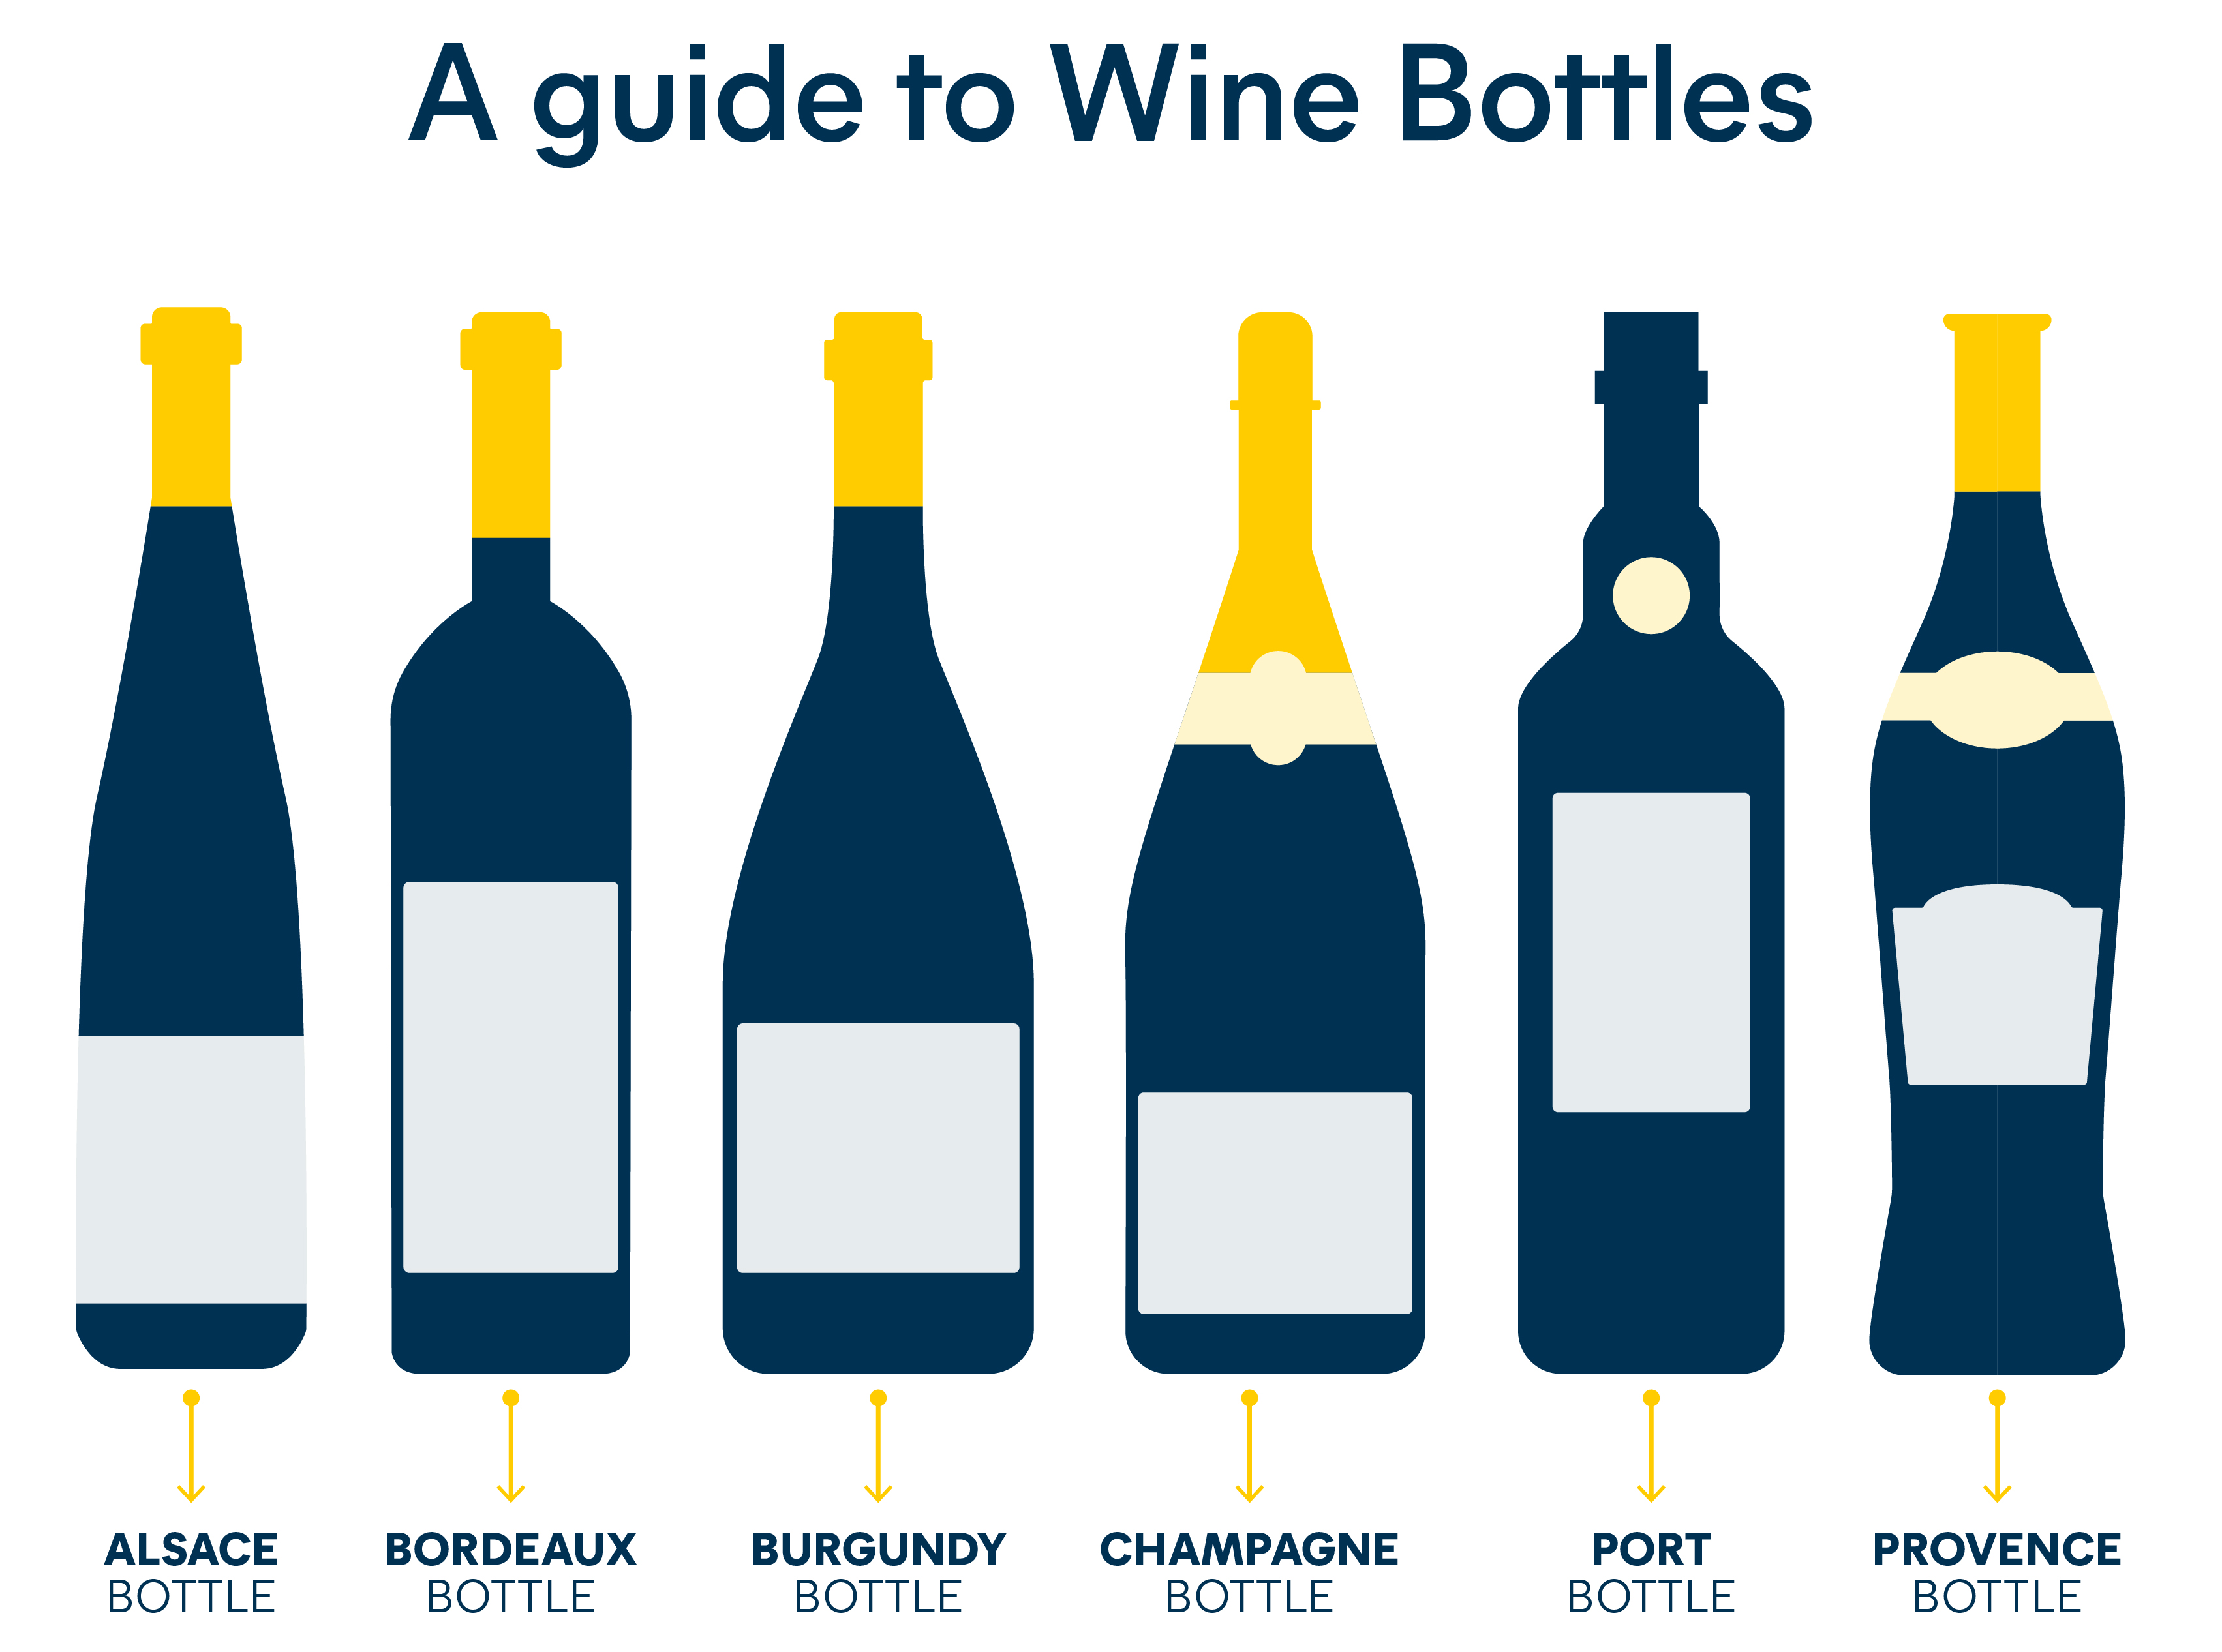 https://www.hillebrandgori.com/images/default-source/careers/wine-bottle-dimensions-a-guide-to-wine-bottles.jpg?sfvrsn=d6c17274_1